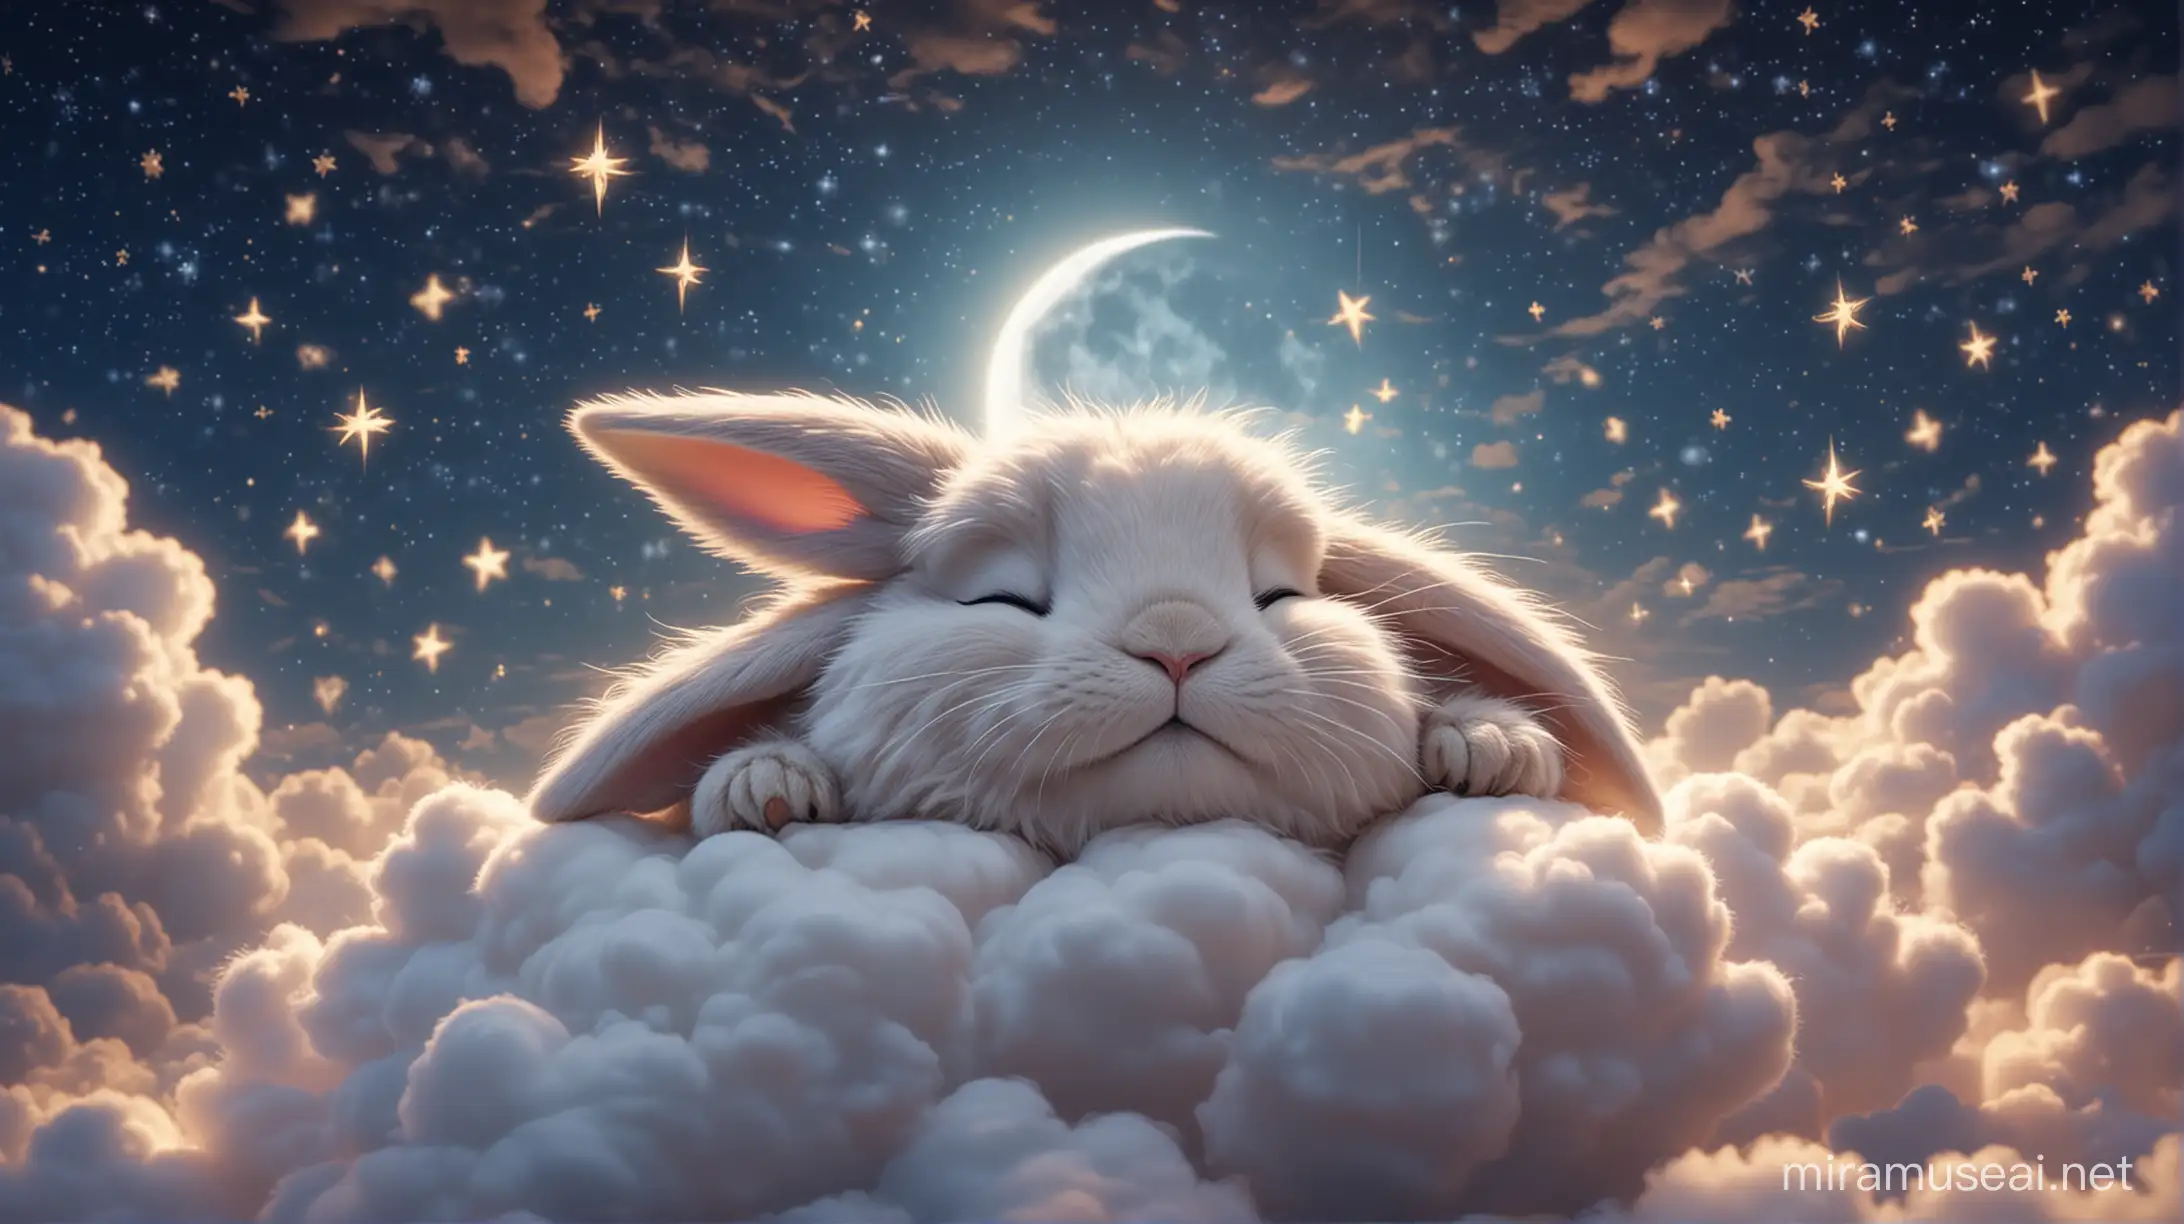 Dreamy Fluffy Bunny Sleeping on Clouds under Starry Night Sky